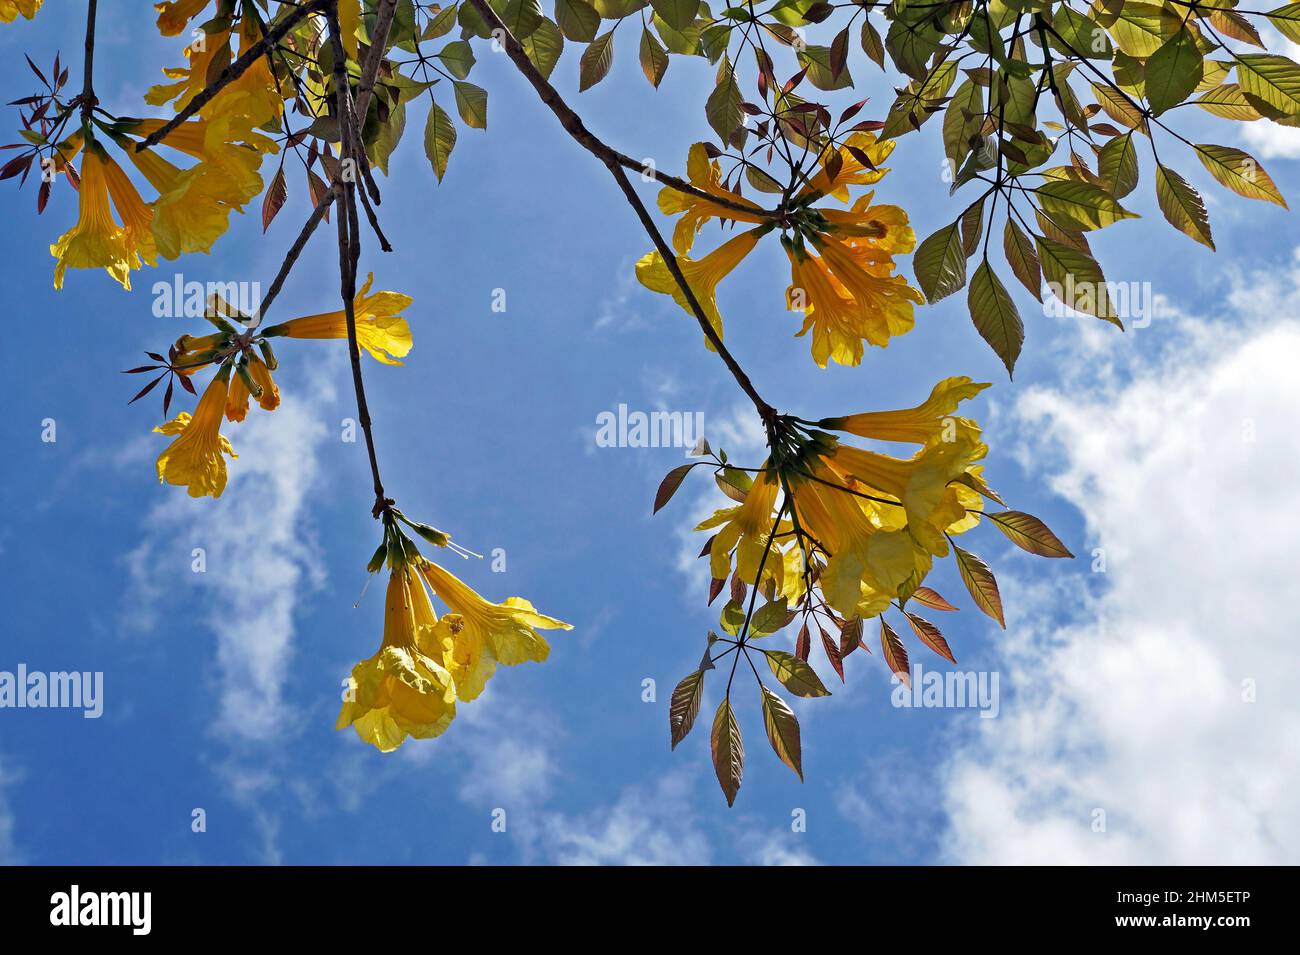 Goldene Trompetenbaumblumen oder gelbe ipe-Baumblumen (Handroanthus chrysotrichus) Stockfoto